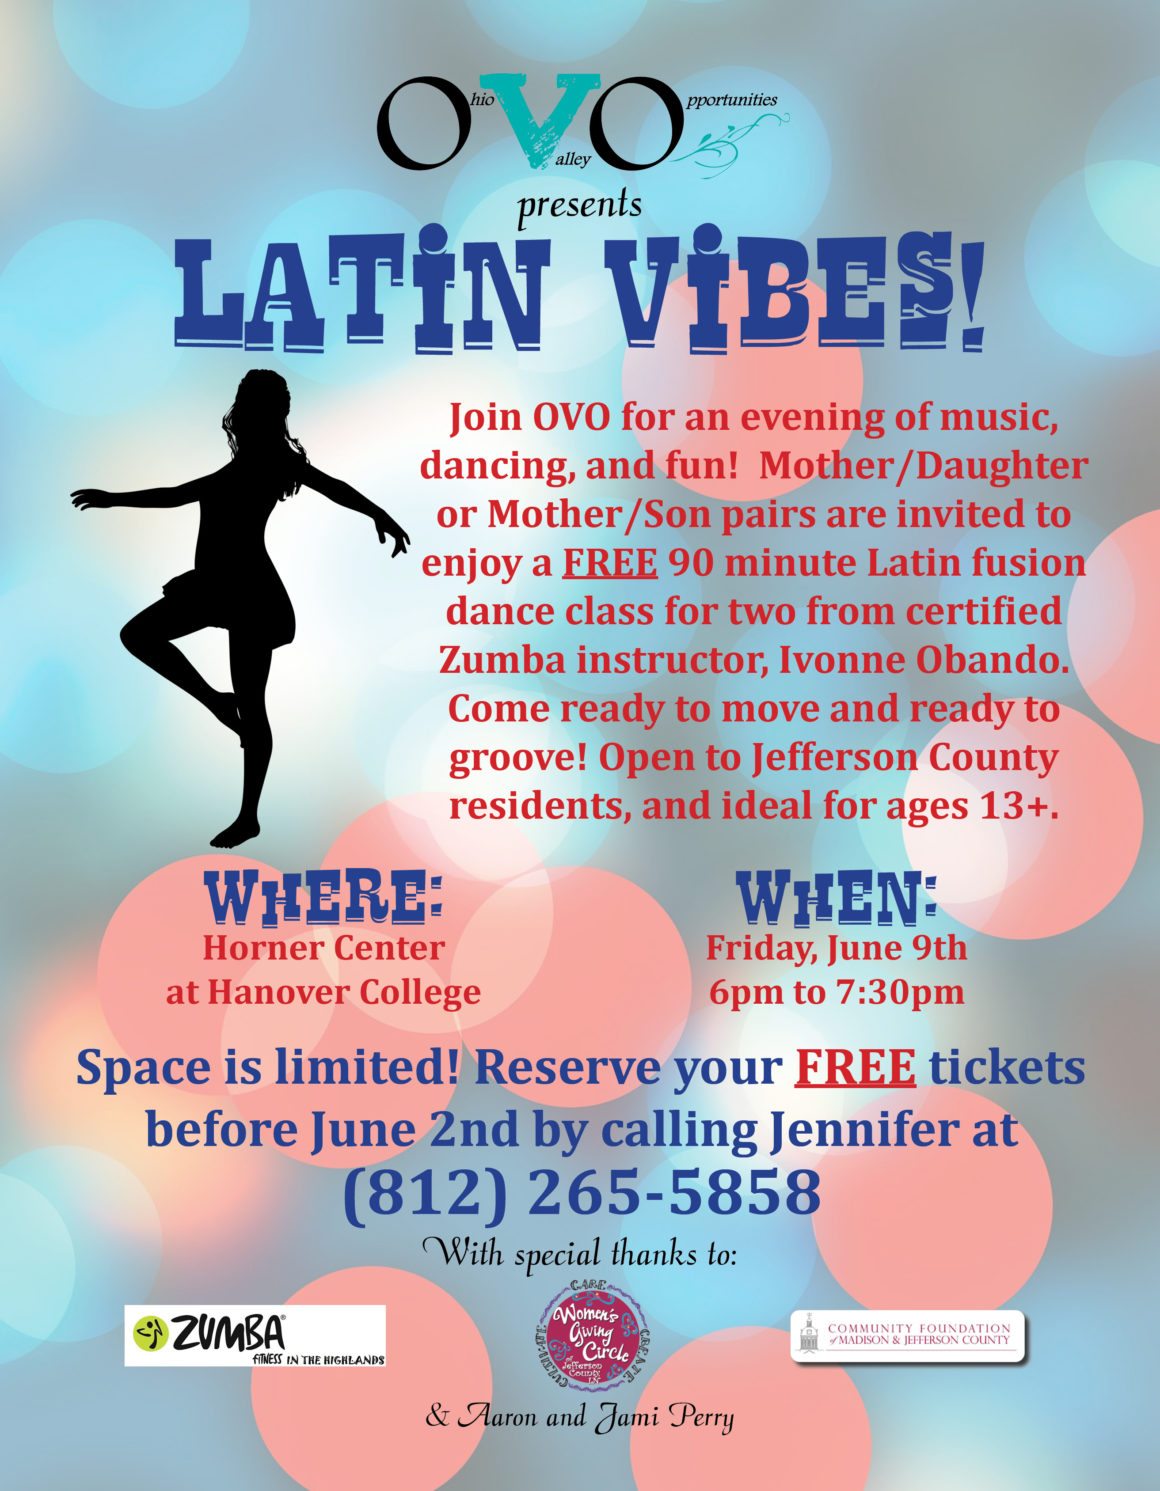 OVO Presents Latin Vibes!